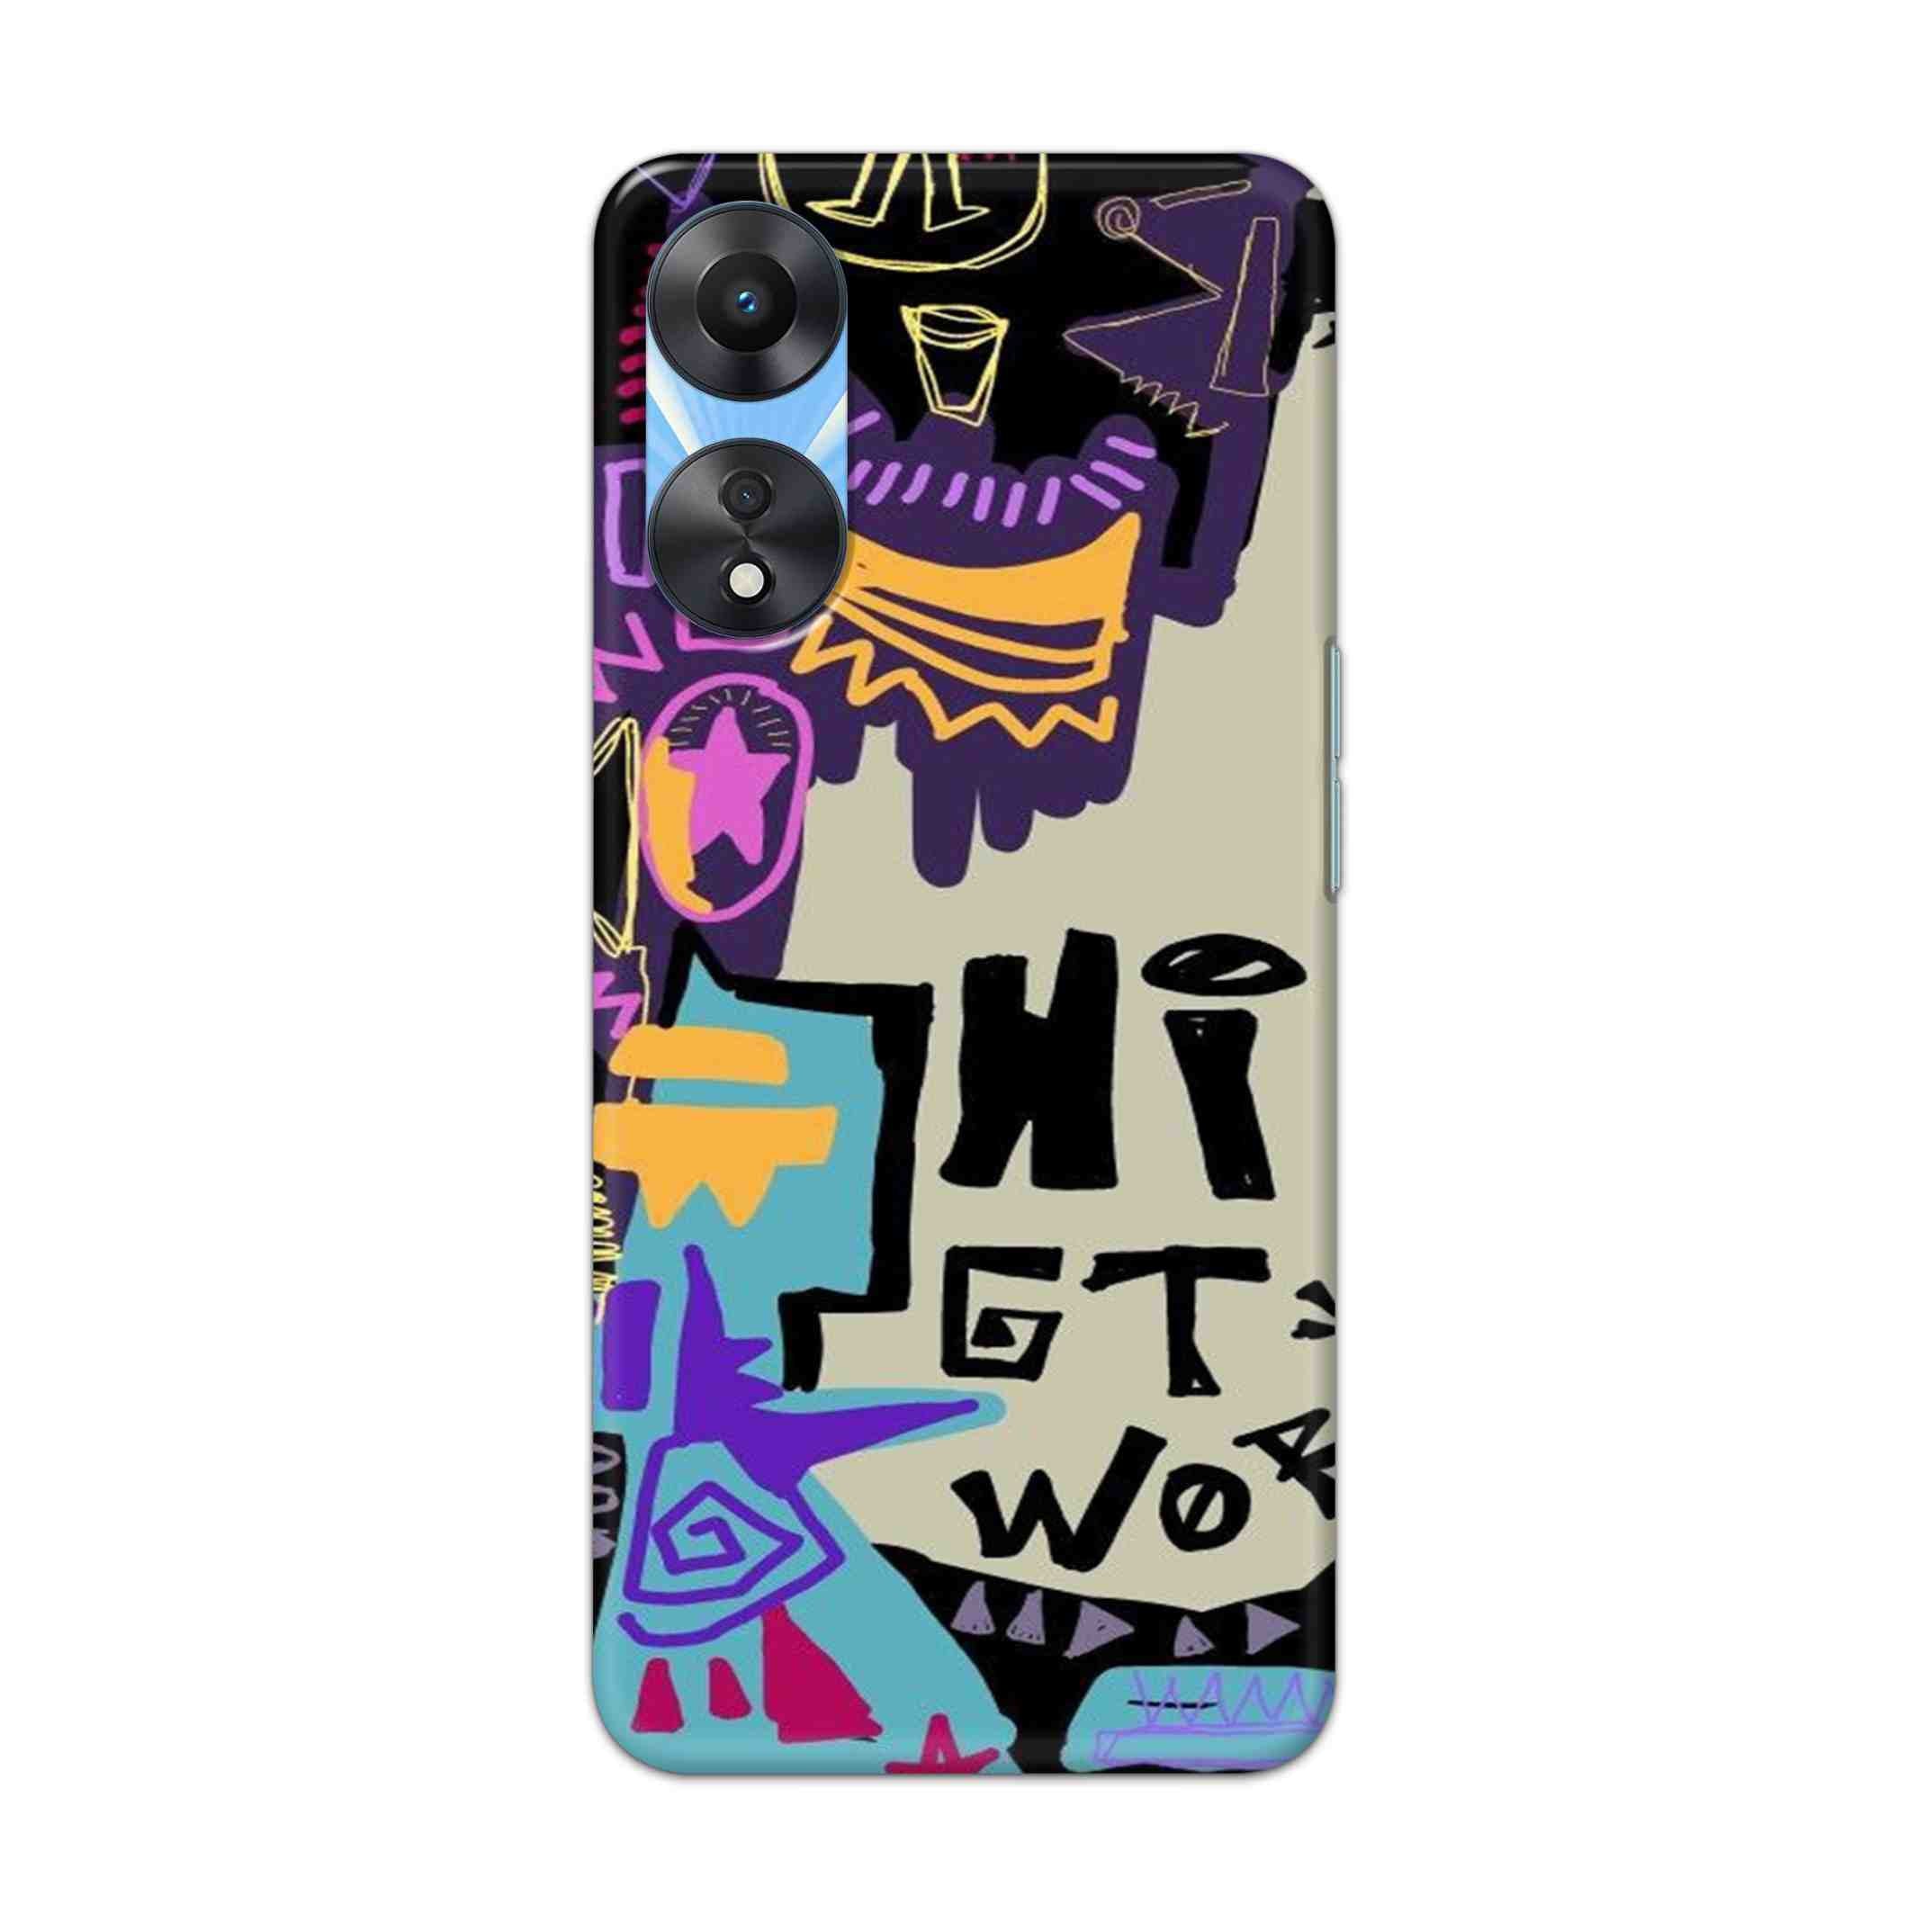 Buy Hi Gt World Hard Back Mobile Phone Case Cover For OPPO A78 Online